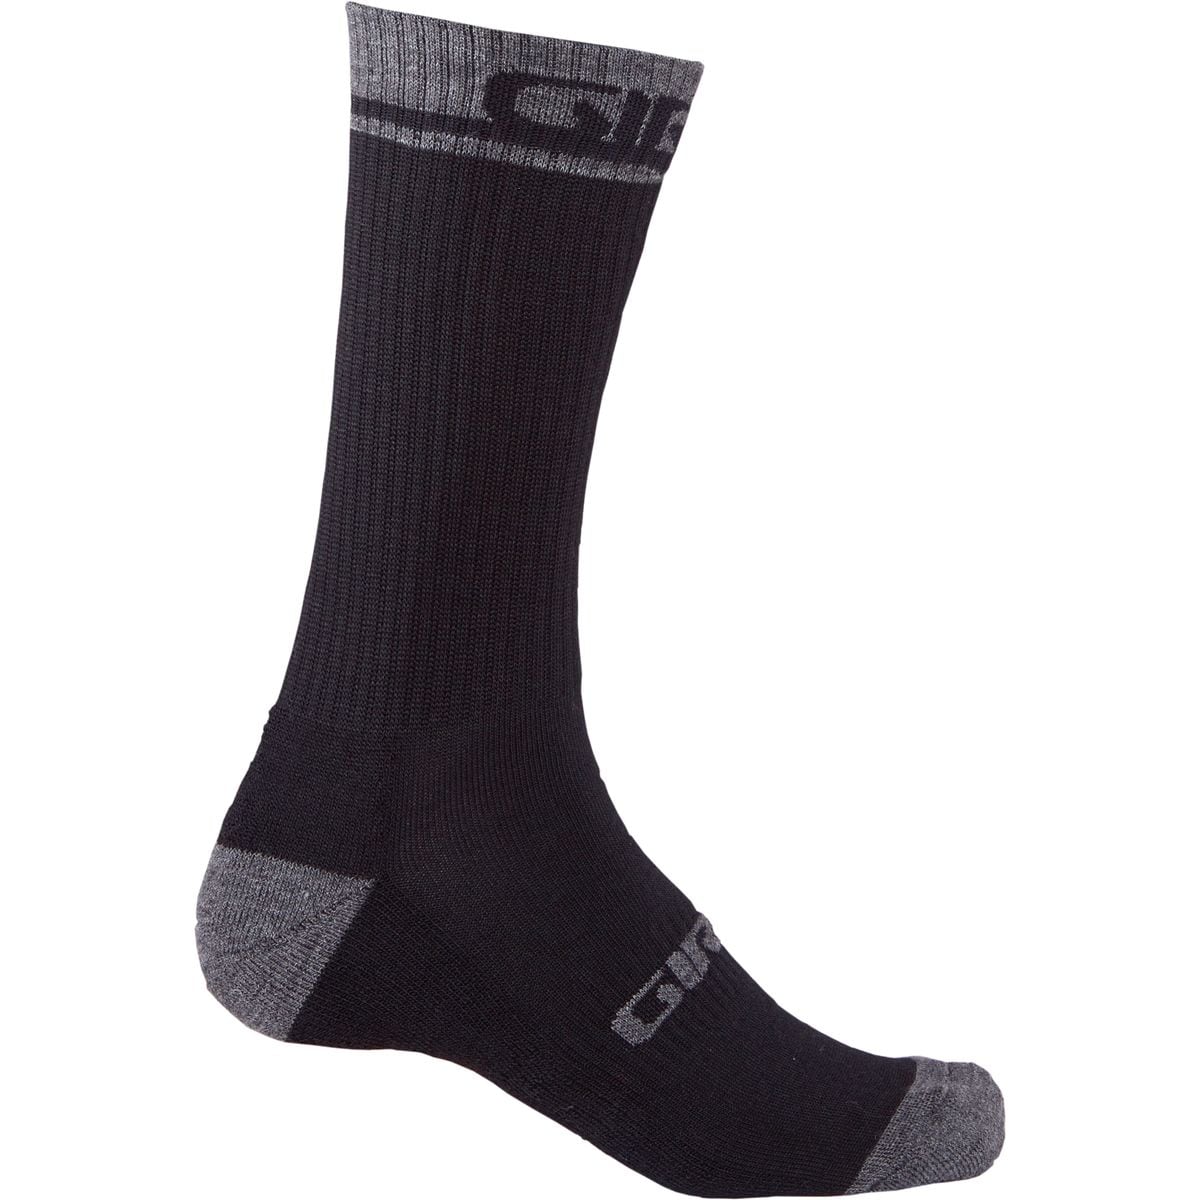 Giro Merino Winter Sock - Men